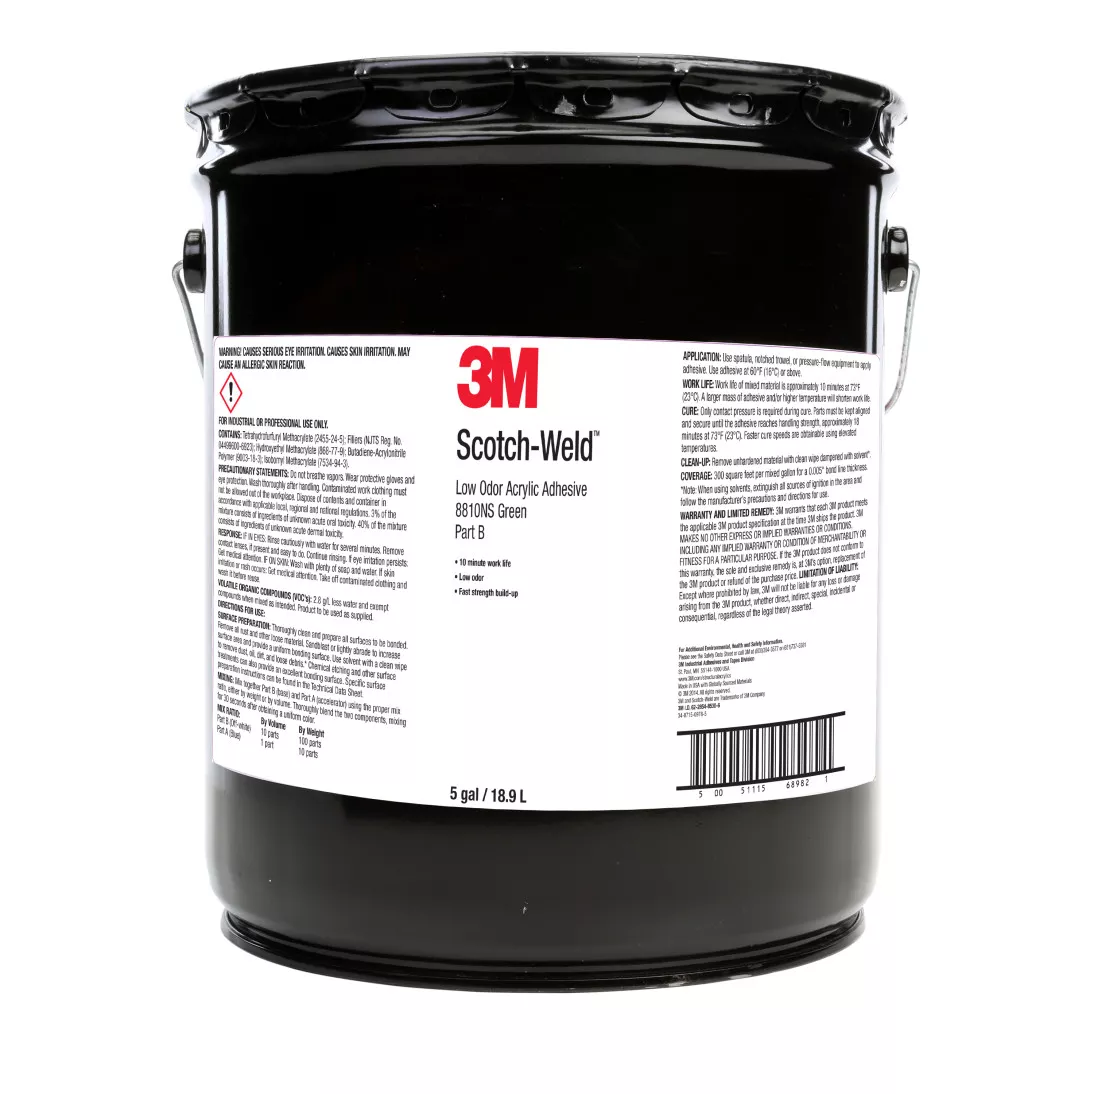 3M™ Scotch-Weld™ Low Odor Acrylic Adhesive 8810NS, Green, Part B, 5
Gallon Drum (Pail)